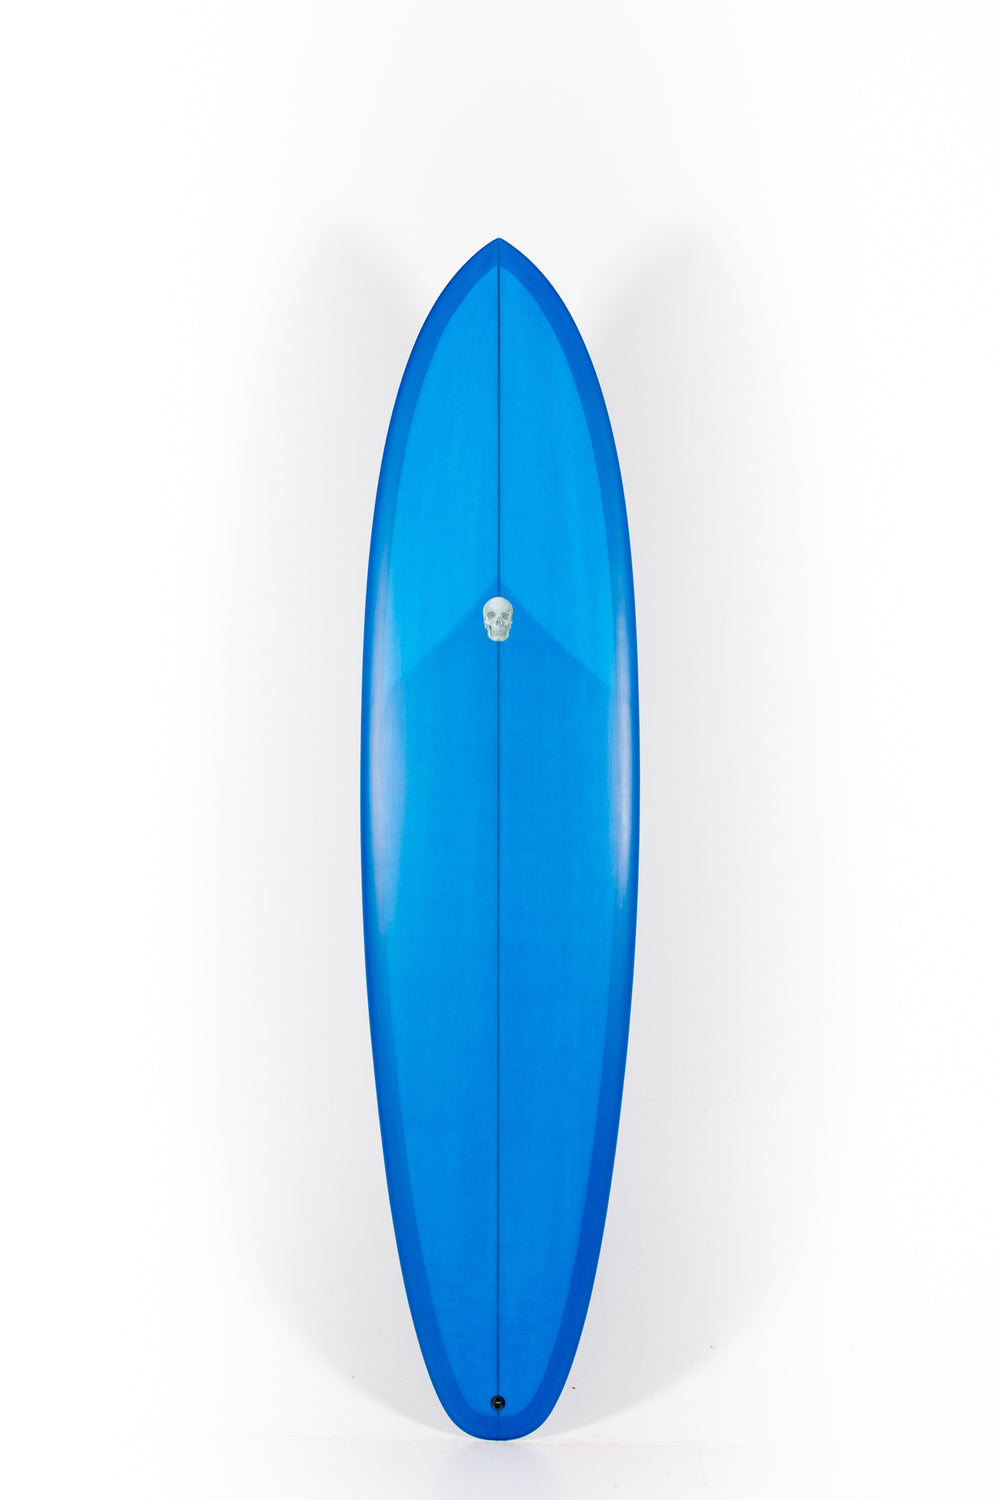 Pukas Surf shop - Christenson Surfboards - TWIN TRACKER - 7'6